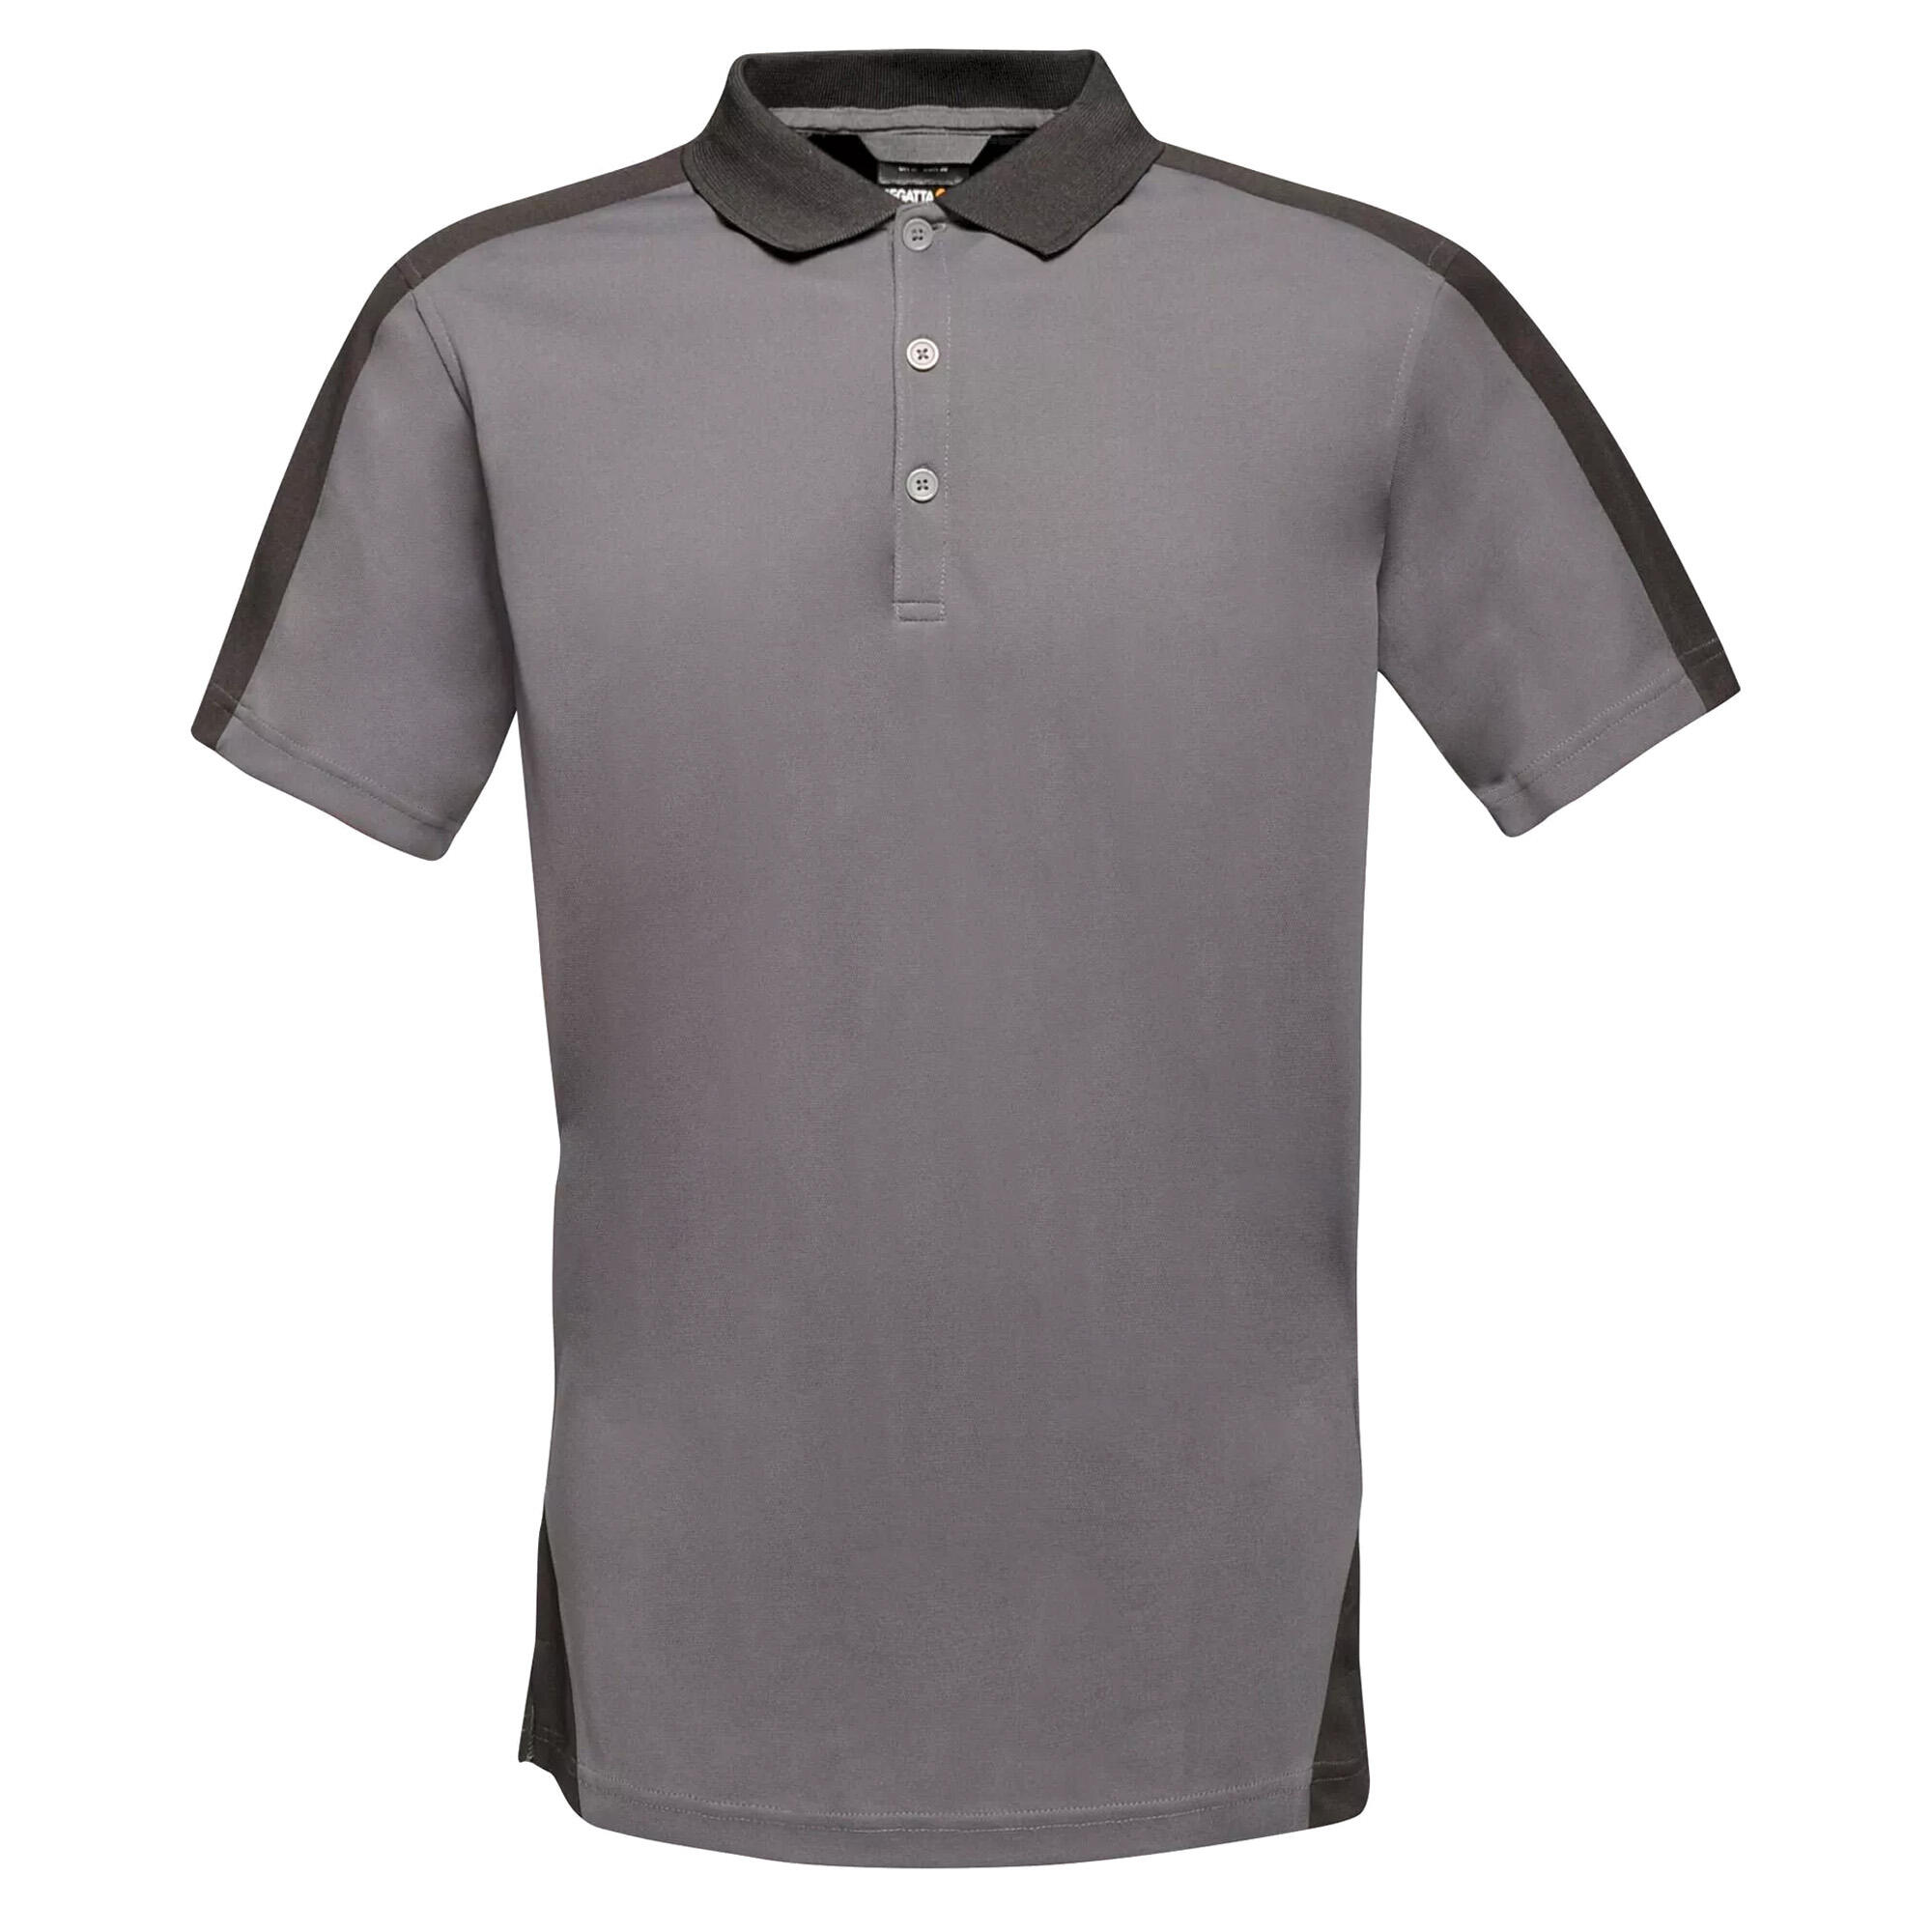 Contrast Coolweave Pique Polo Shirt (Seal Grey/Black) 1/4